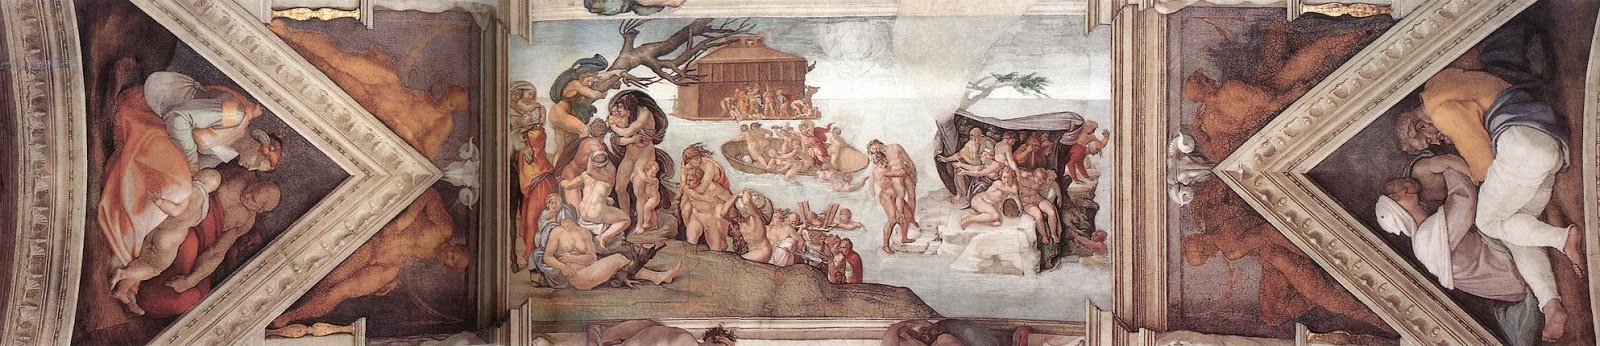 Michelangelo+Buonarroti-1475-1564 (382).jpg